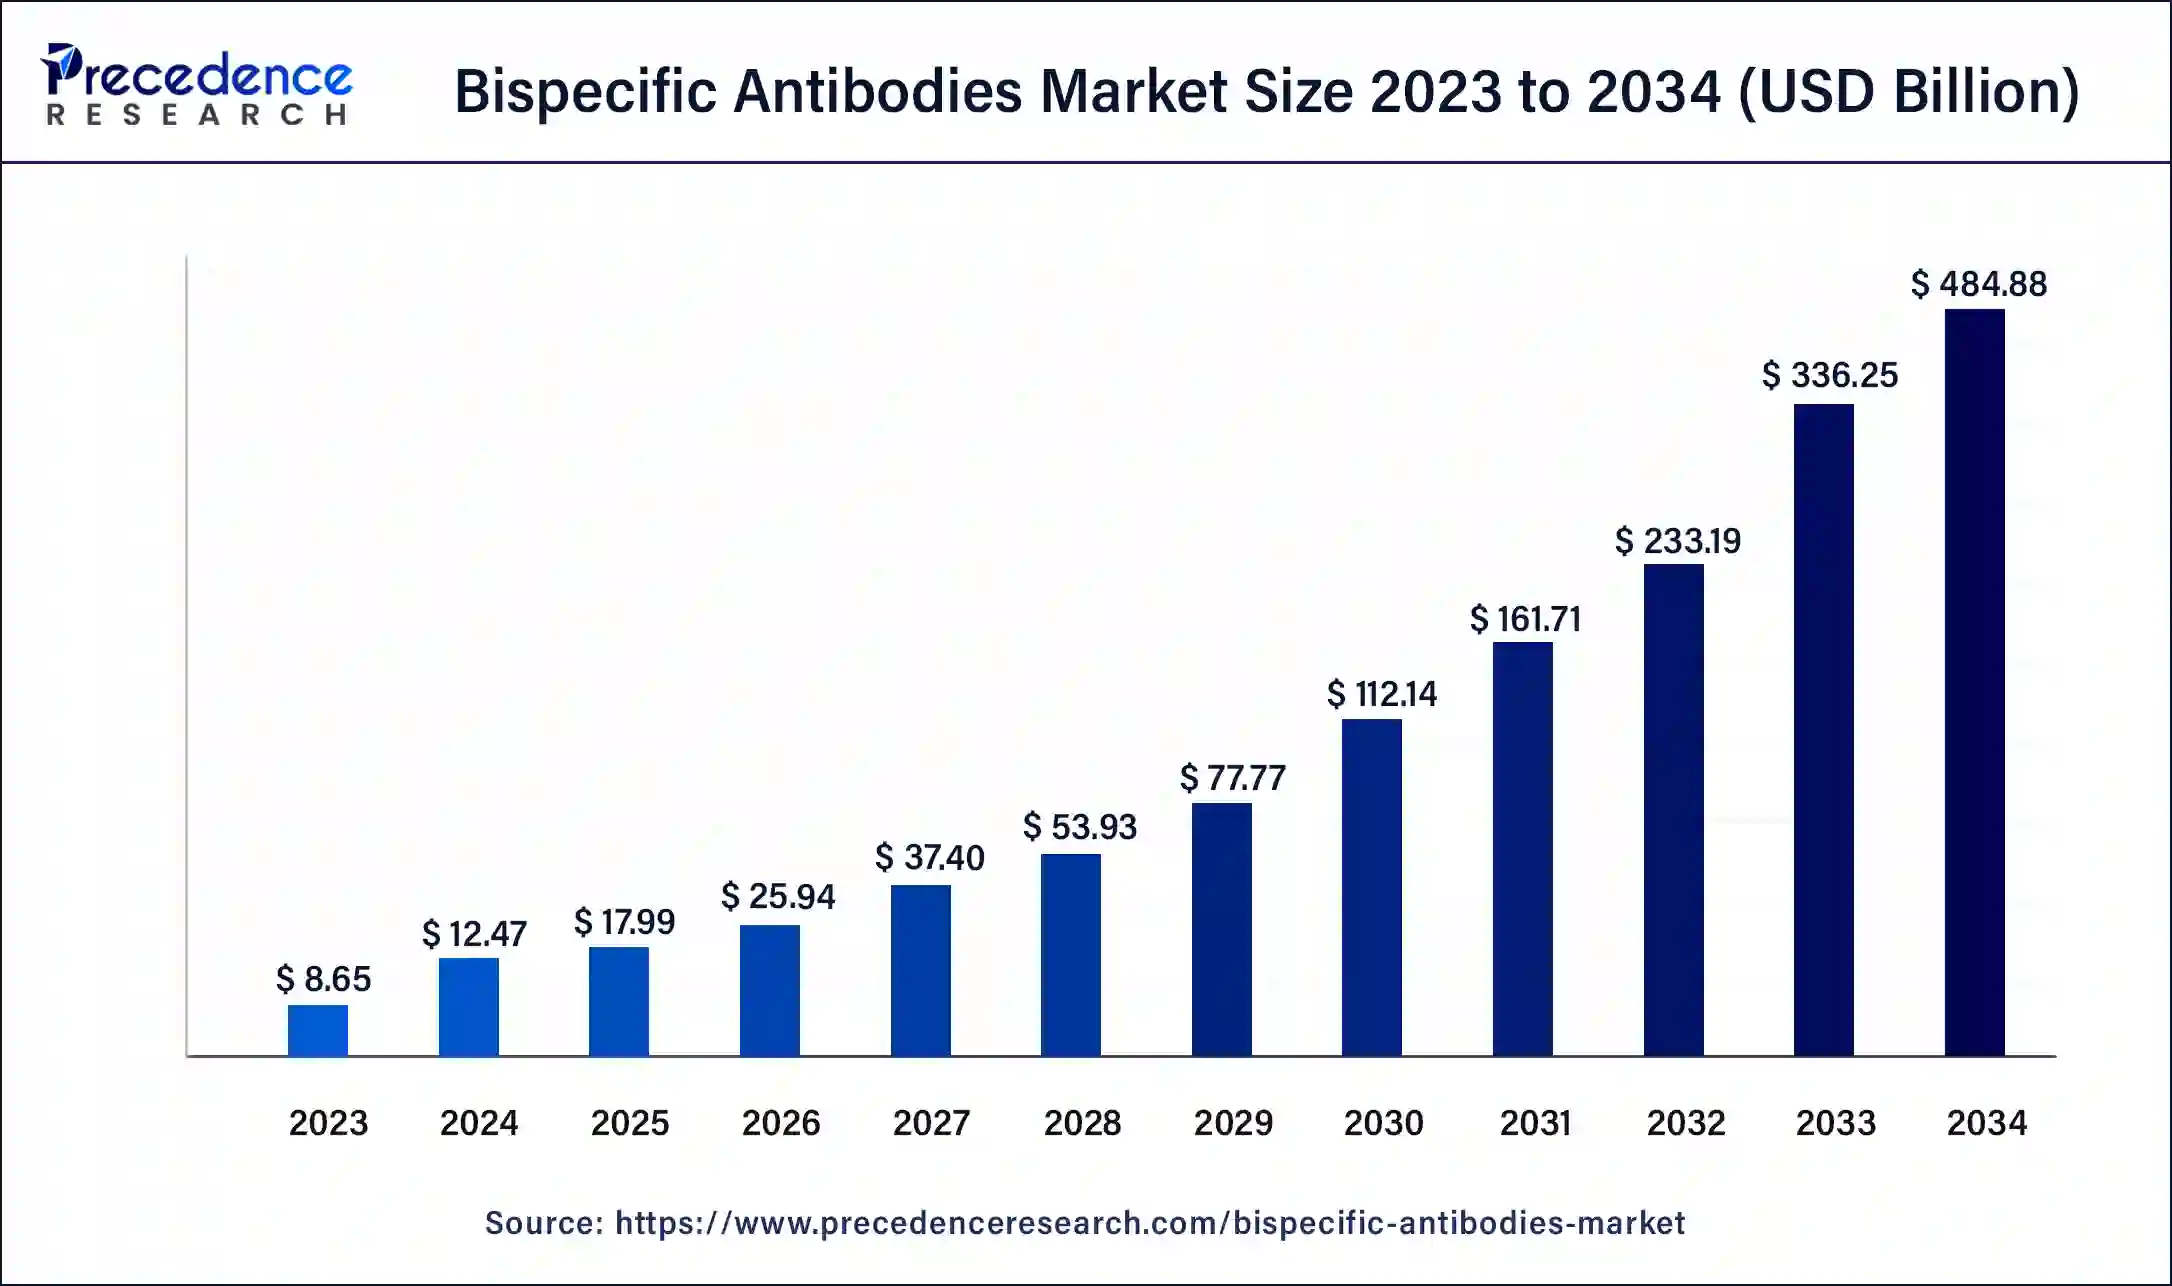 Bispecific Antibodies Market Size 2024 to 2034